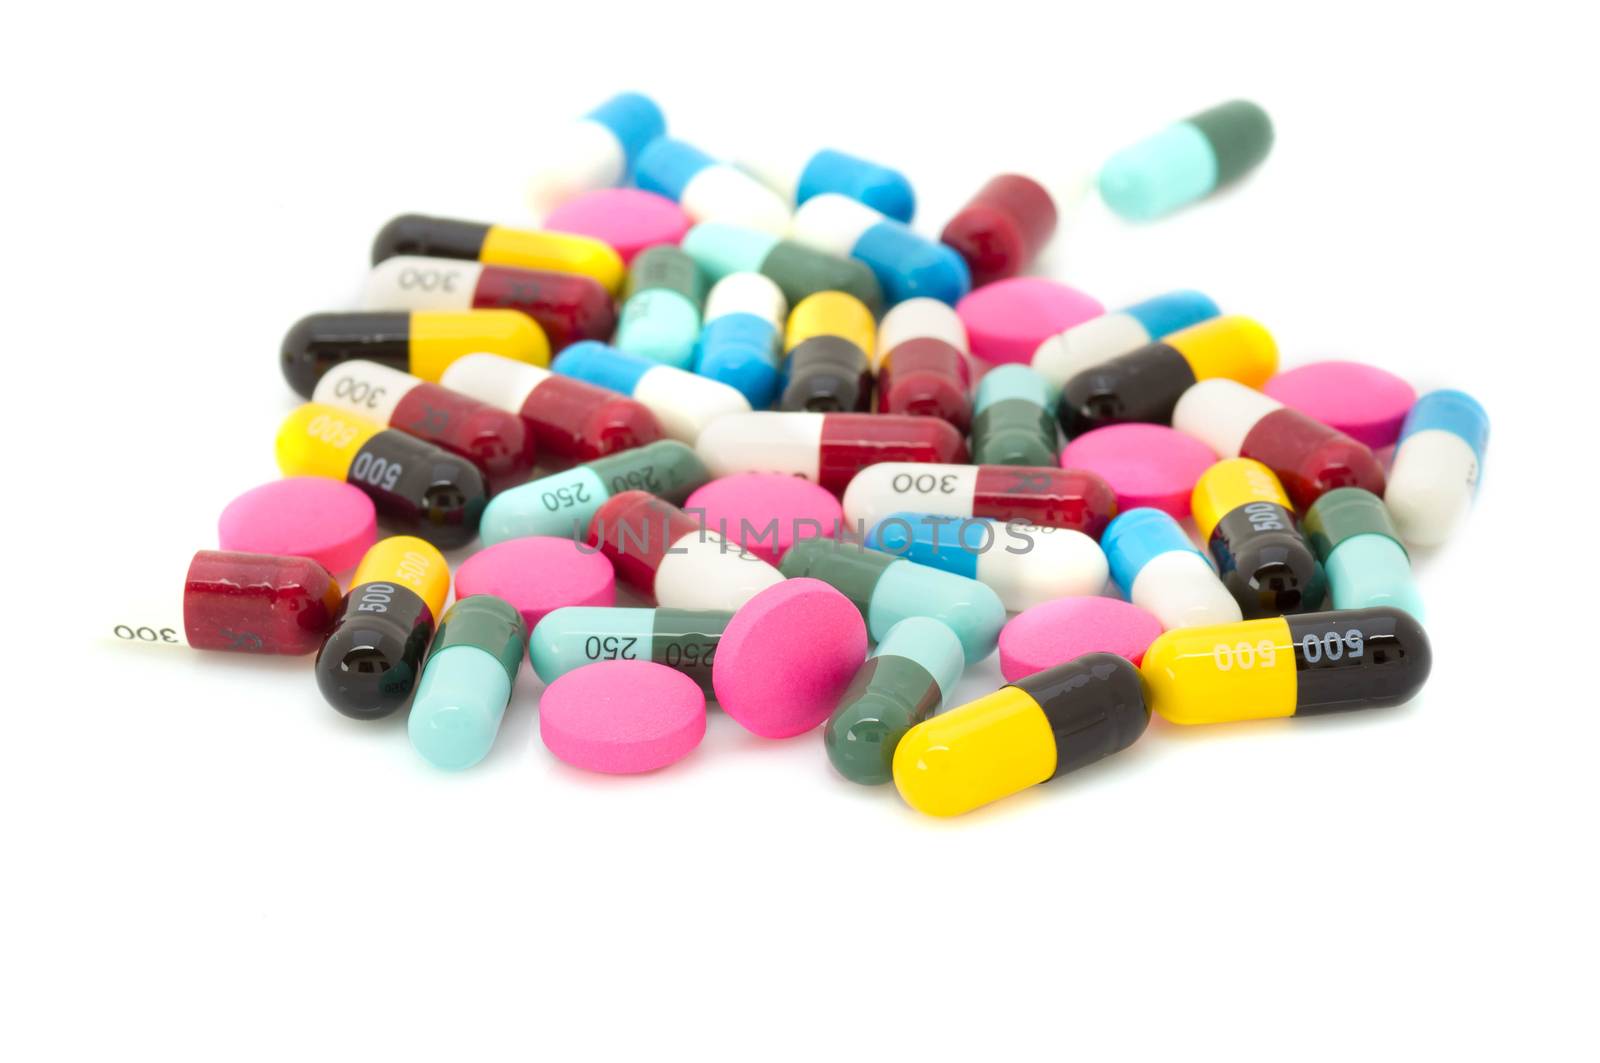 Tablets pills capsule medicines. by seksan44